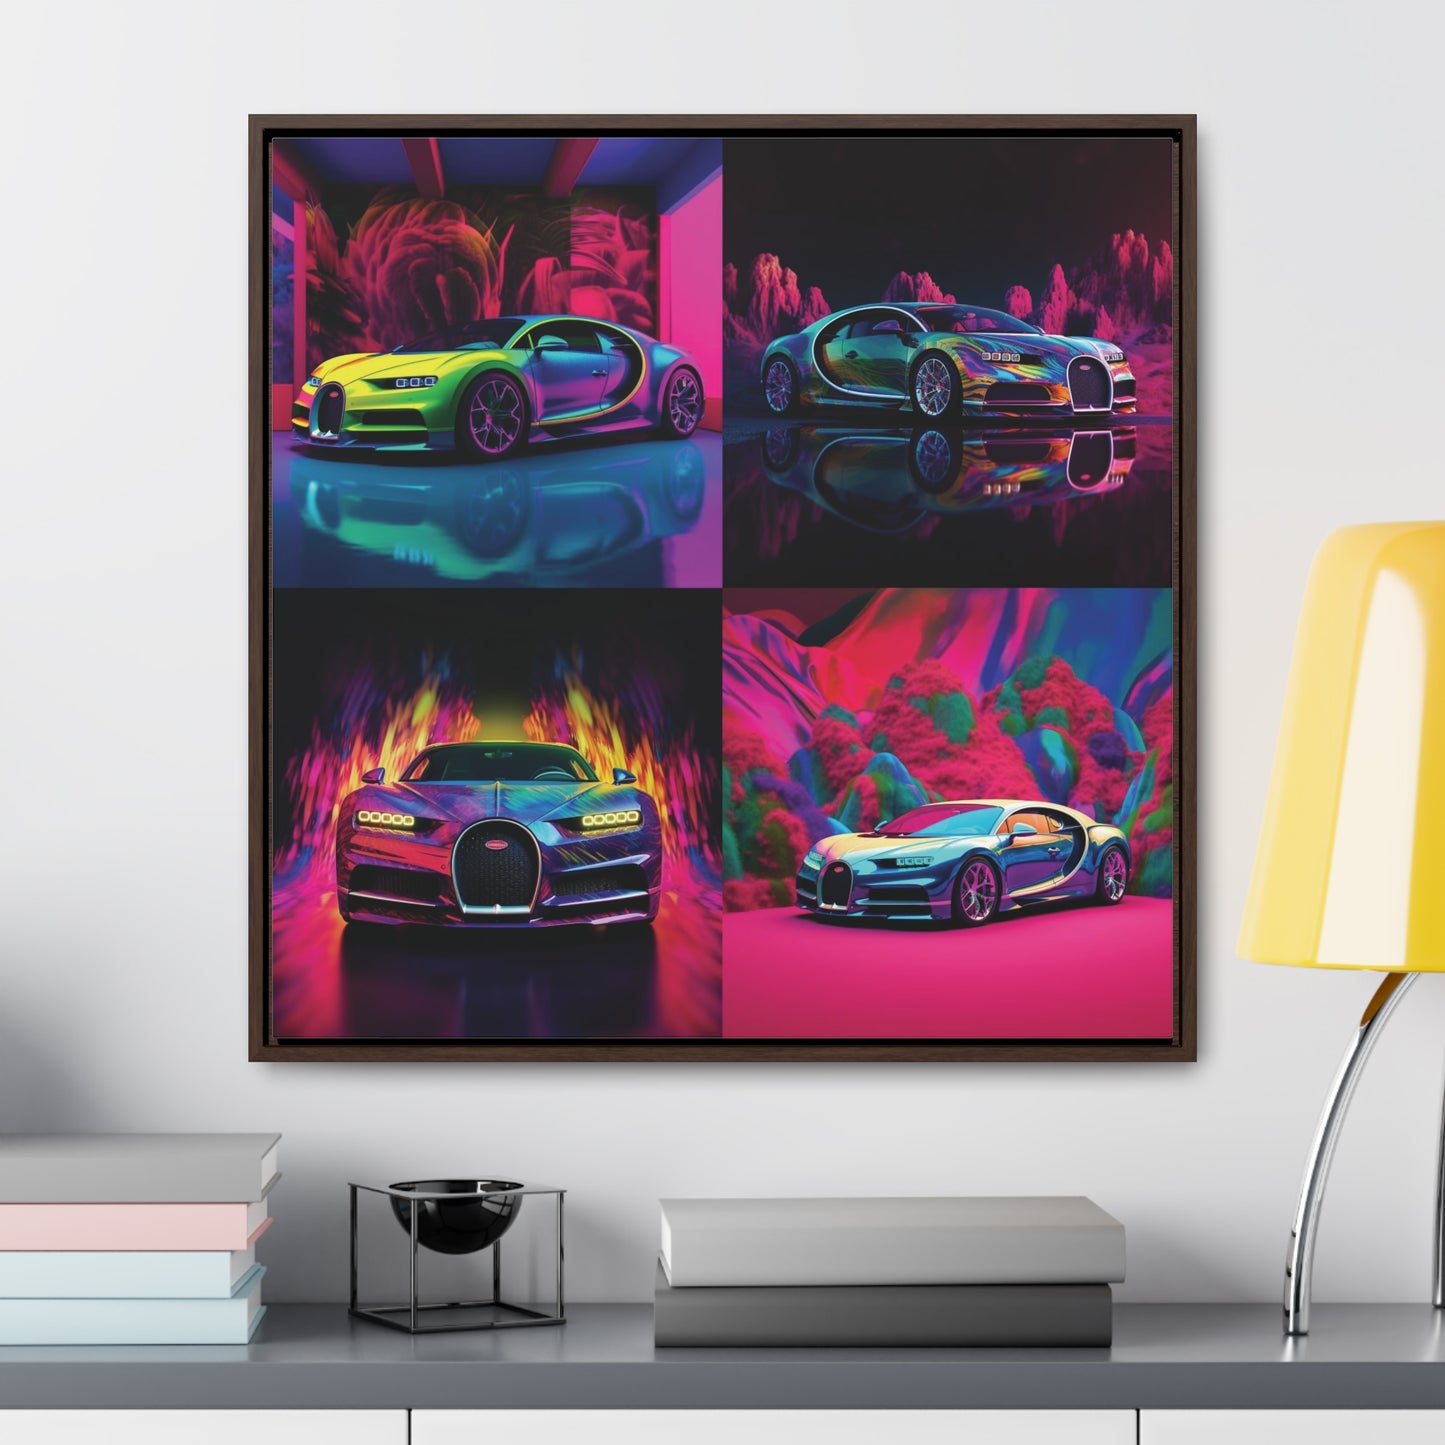 Gallery Canvas Wraps, Square Frame Florescent Bugatti Flair 5